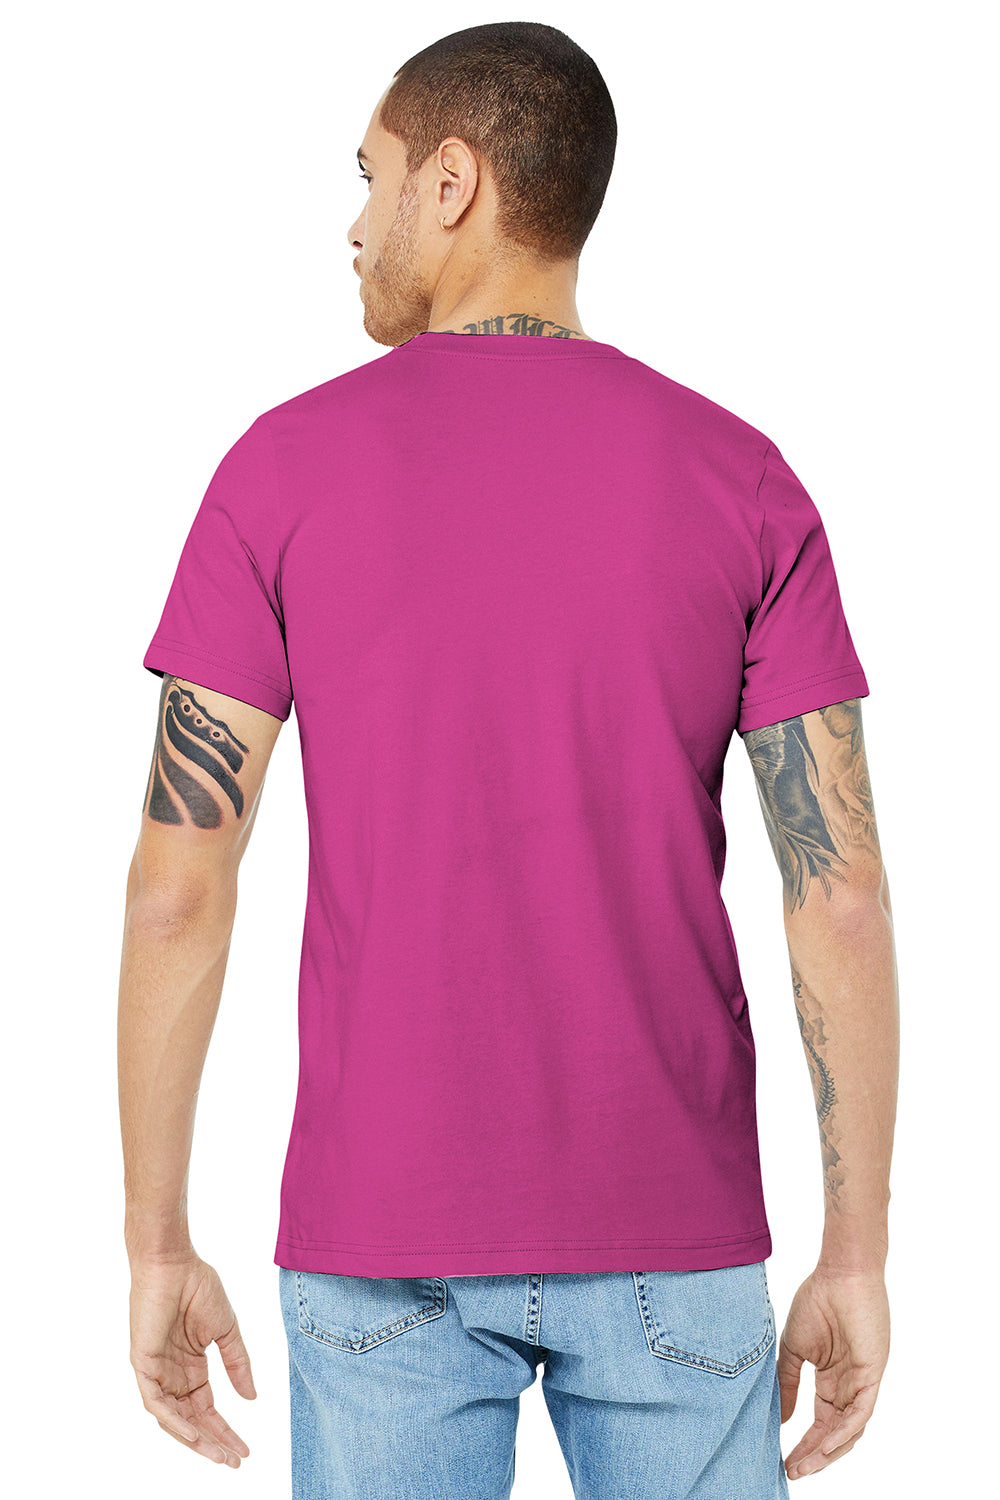 Bella + Canvas BC3001/3001C Mens Jersey Short Sleeve Crewneck T-Shirt Berry Pink Model Back